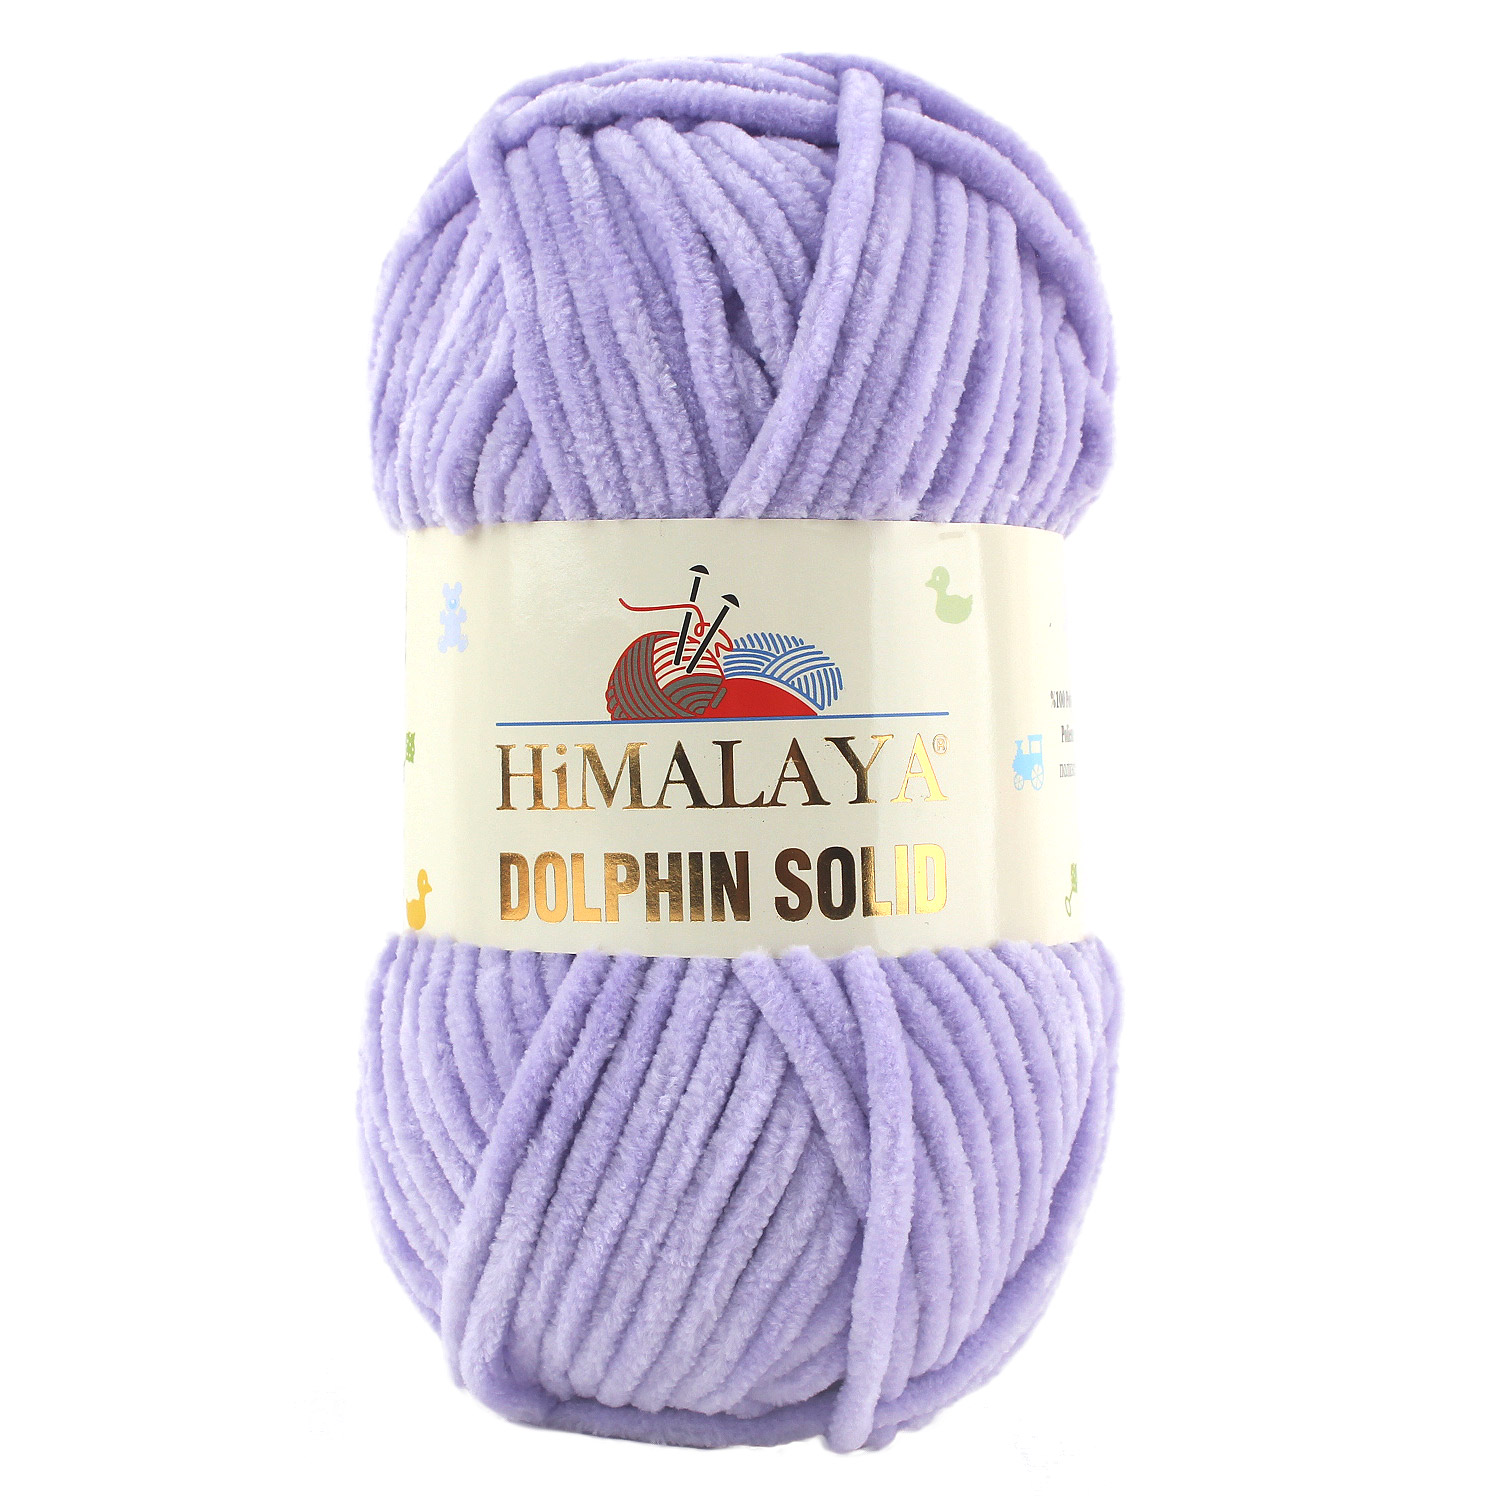 Himalaya Dolphin Baby 100gr 120mt- chenille yarn soft yarn for